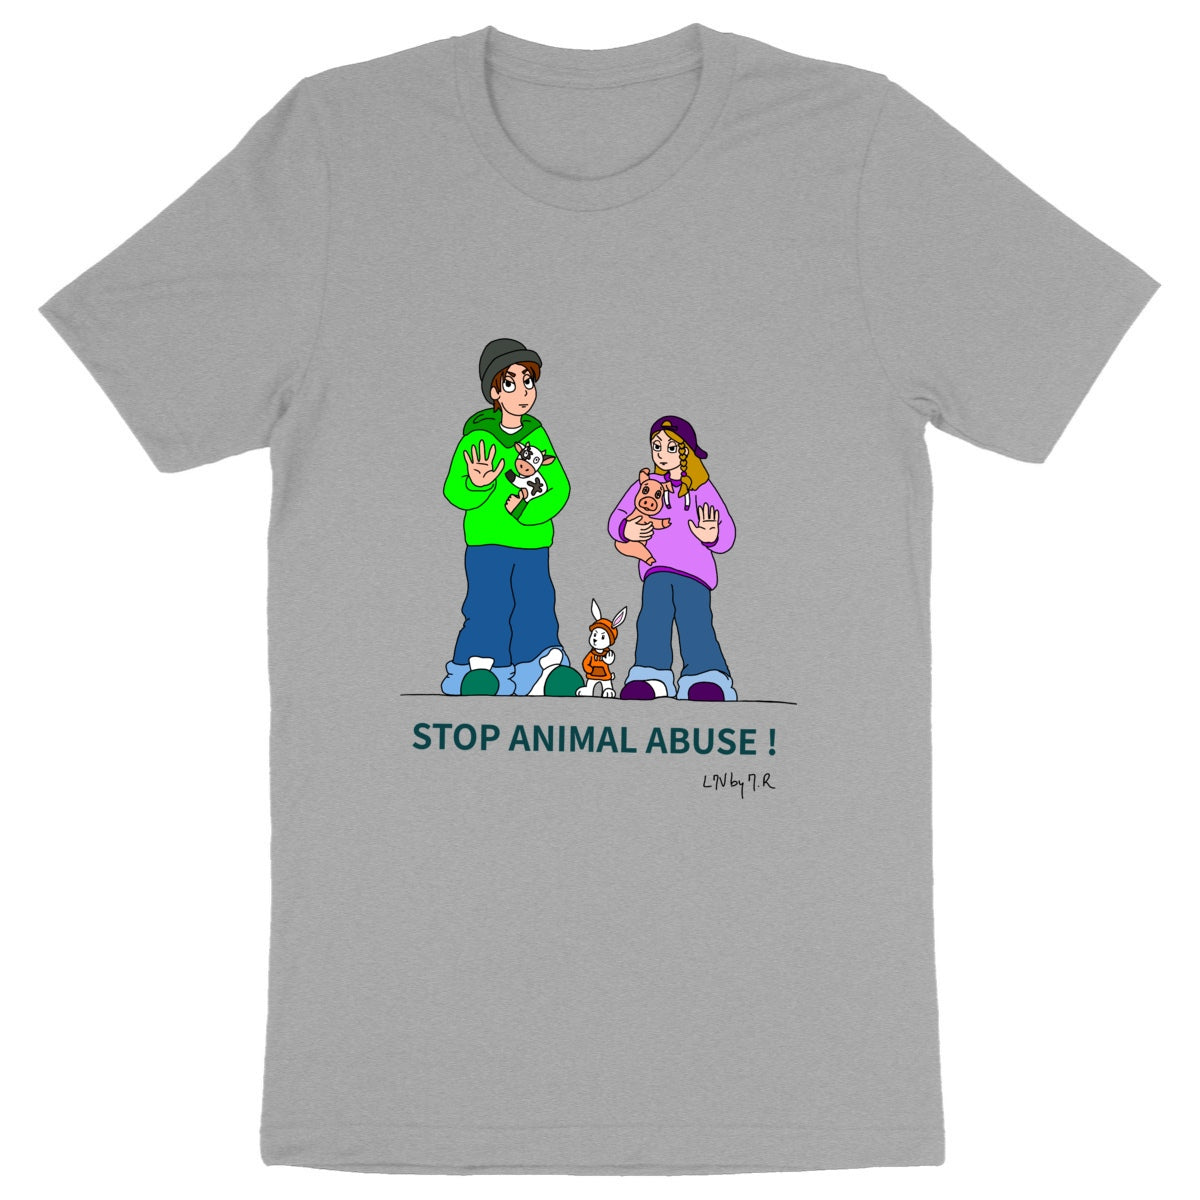 T-shirt HOMME/UNISEXE Bio LMV STOP ANIMAL ABUSE